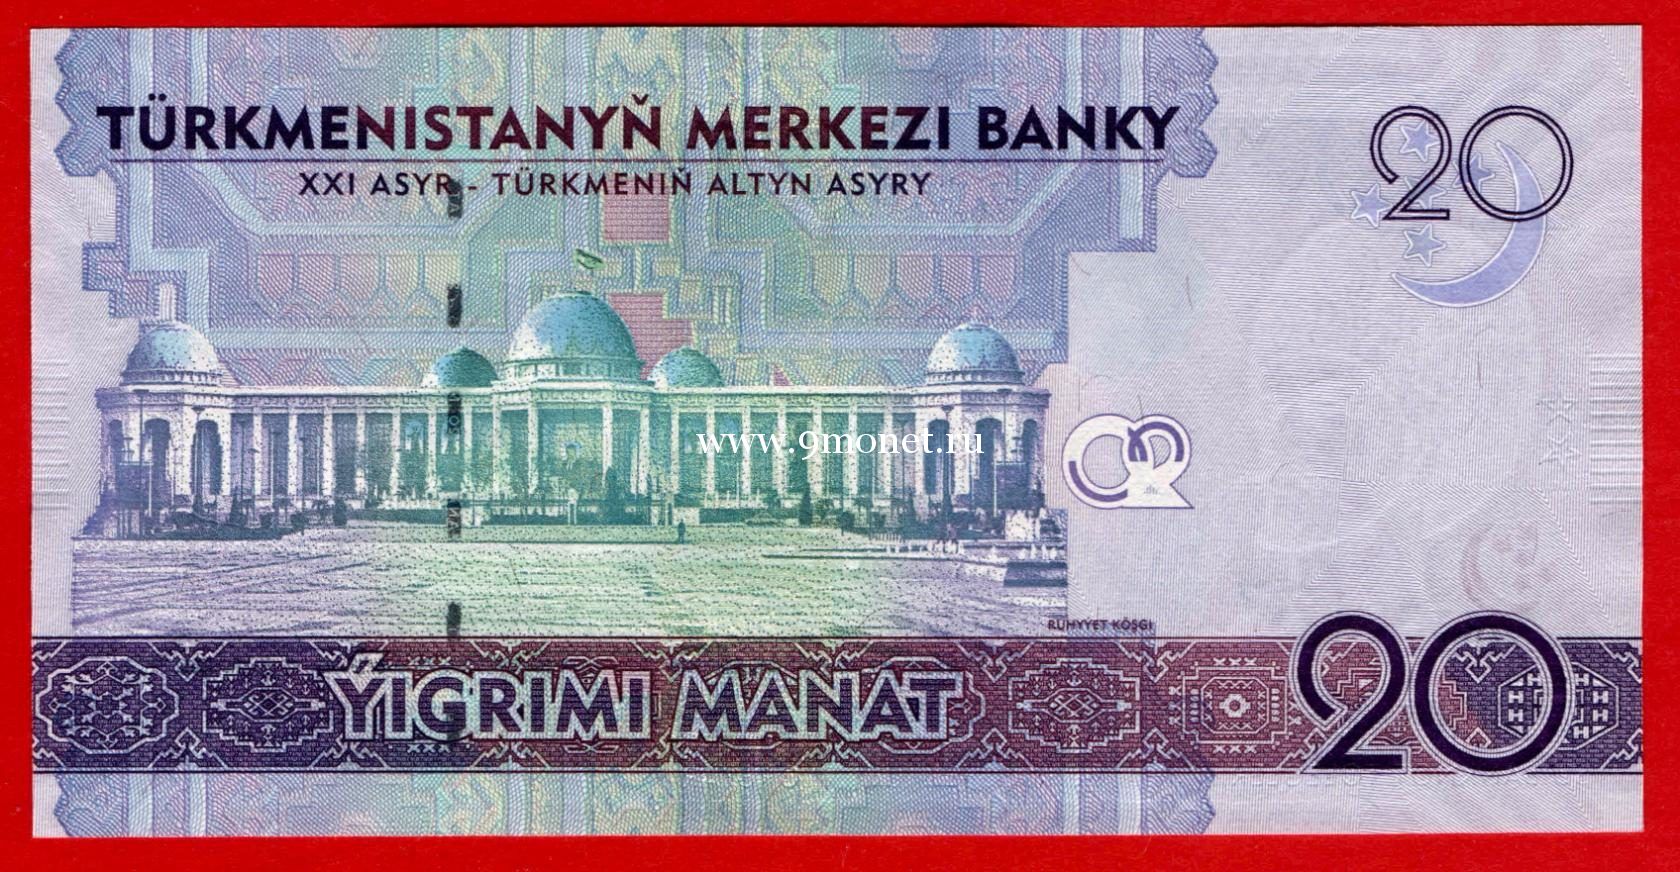 2012 год. Туркменистан. Банкнота 20 манат. UNC